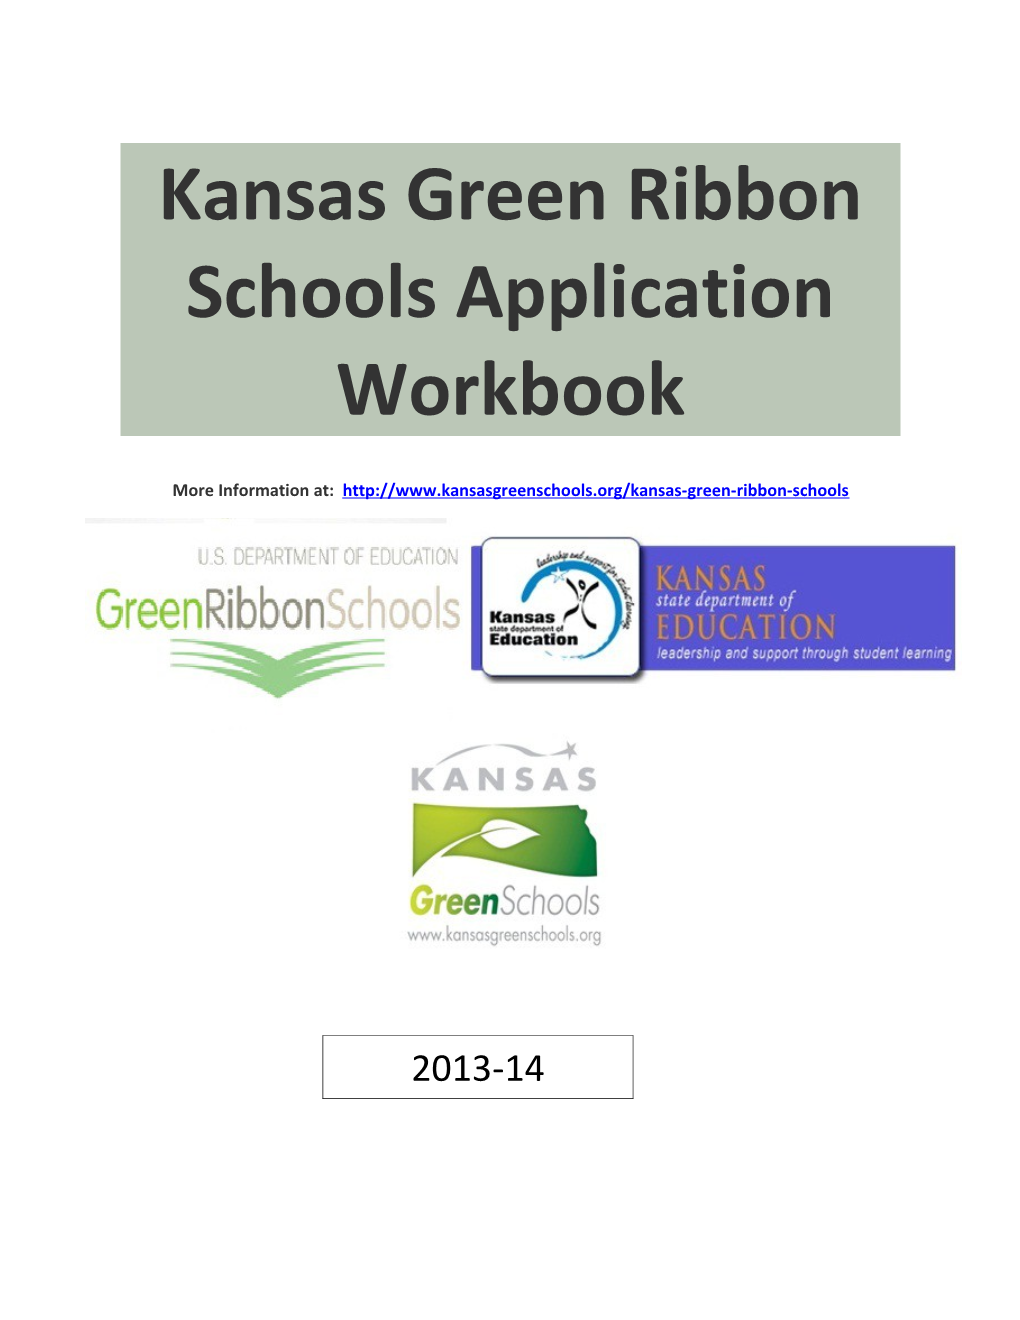 Kansas Green Ribbon Schools Application Workbook